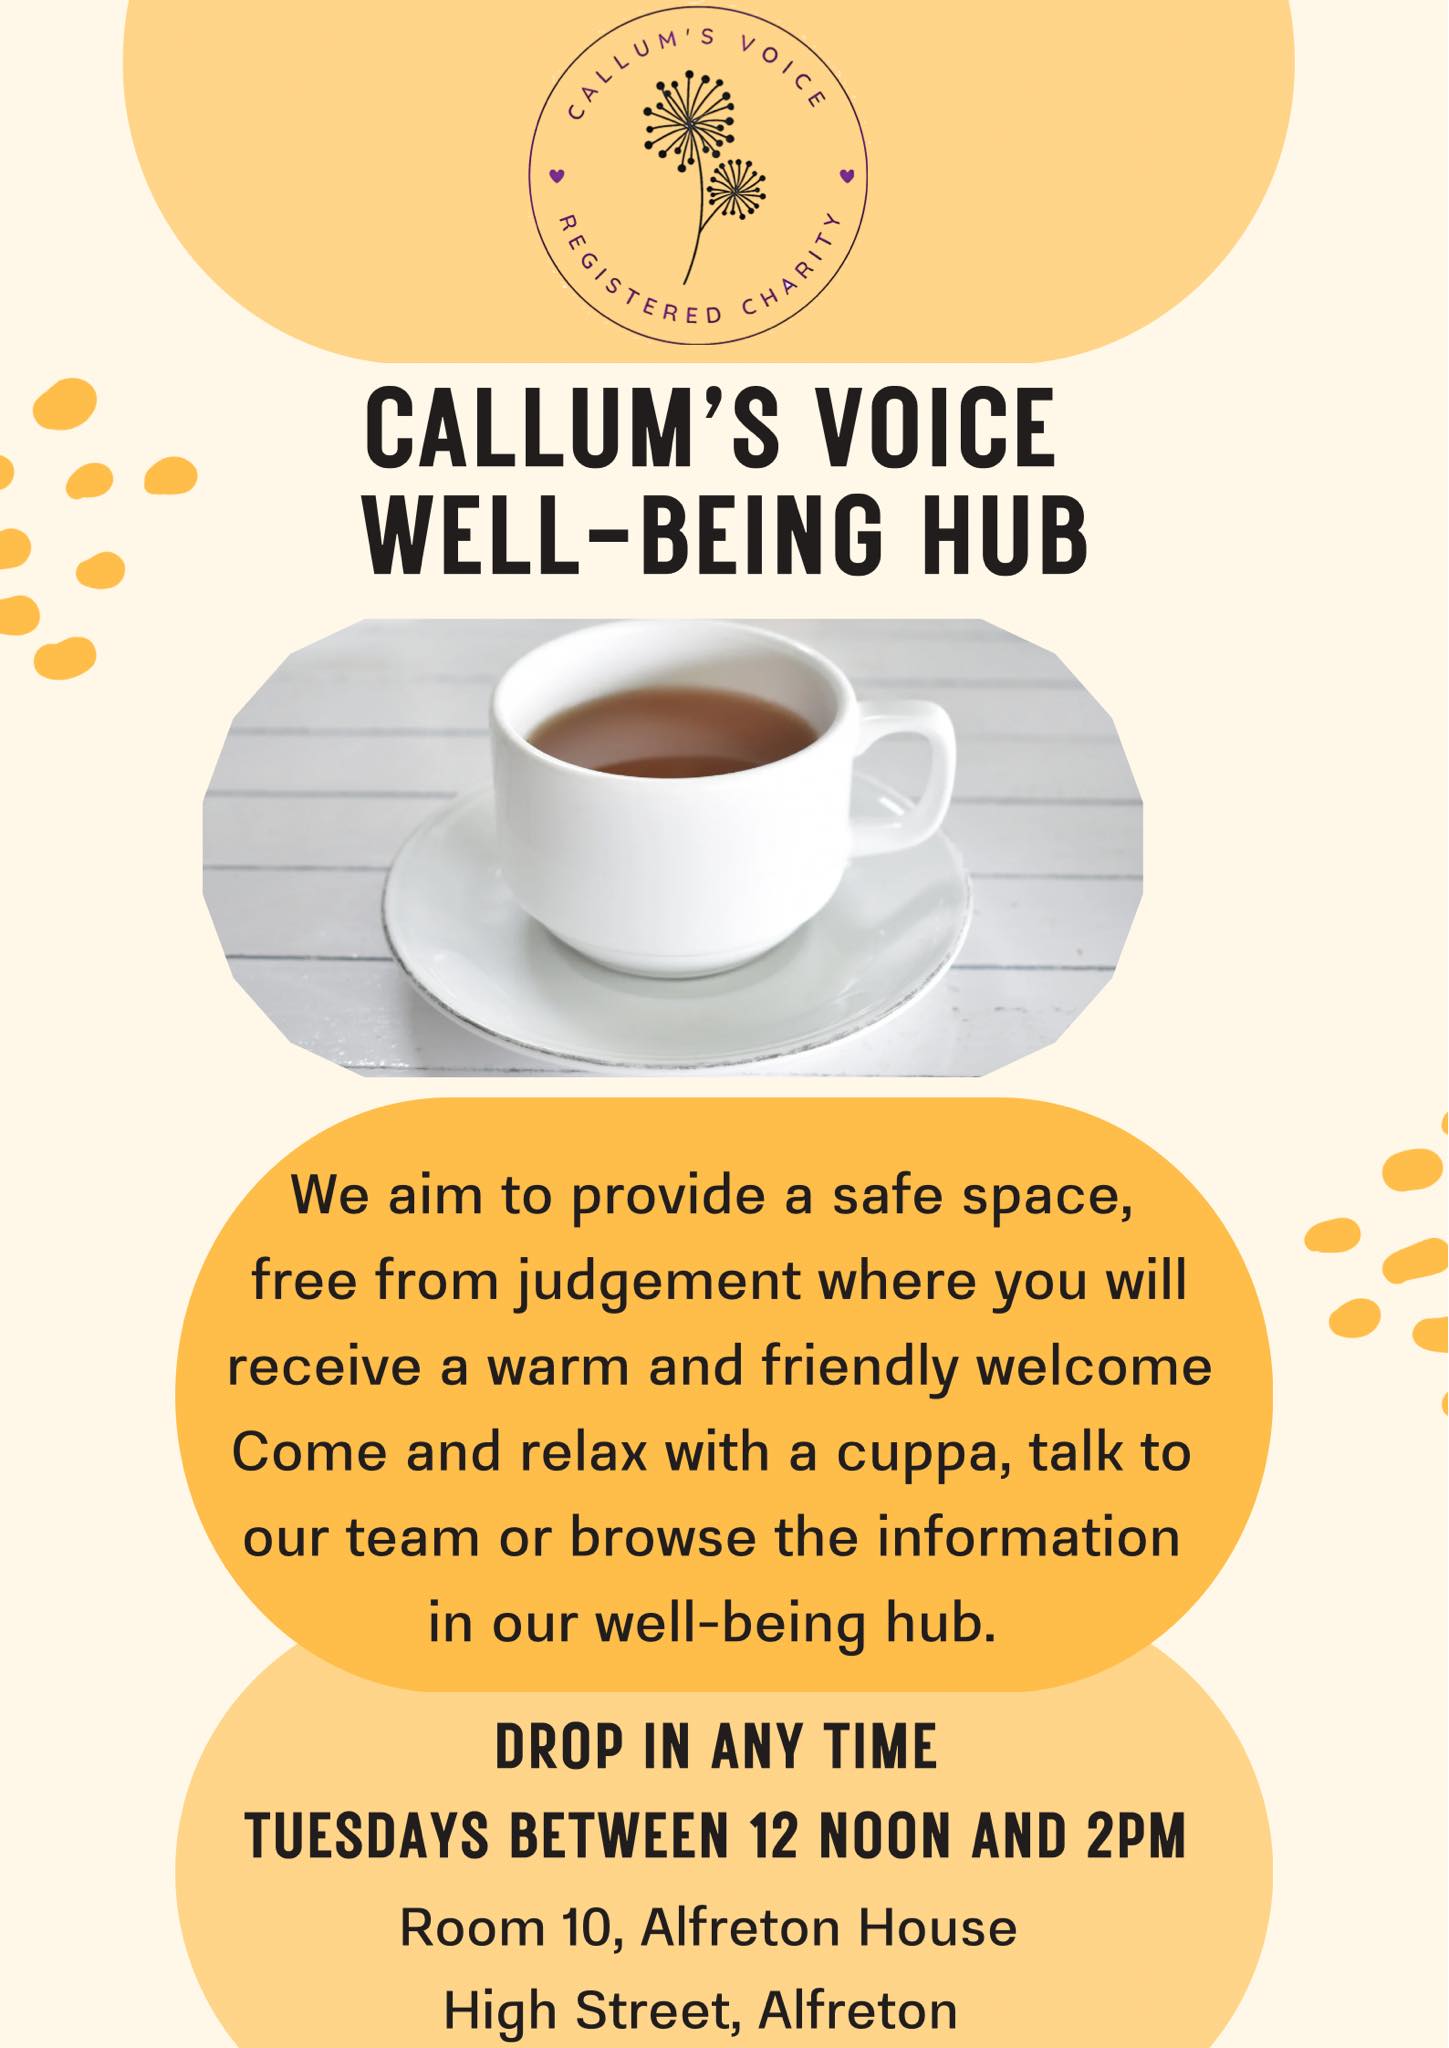 Callum's Voice to open wellbeing hub in Alfreton